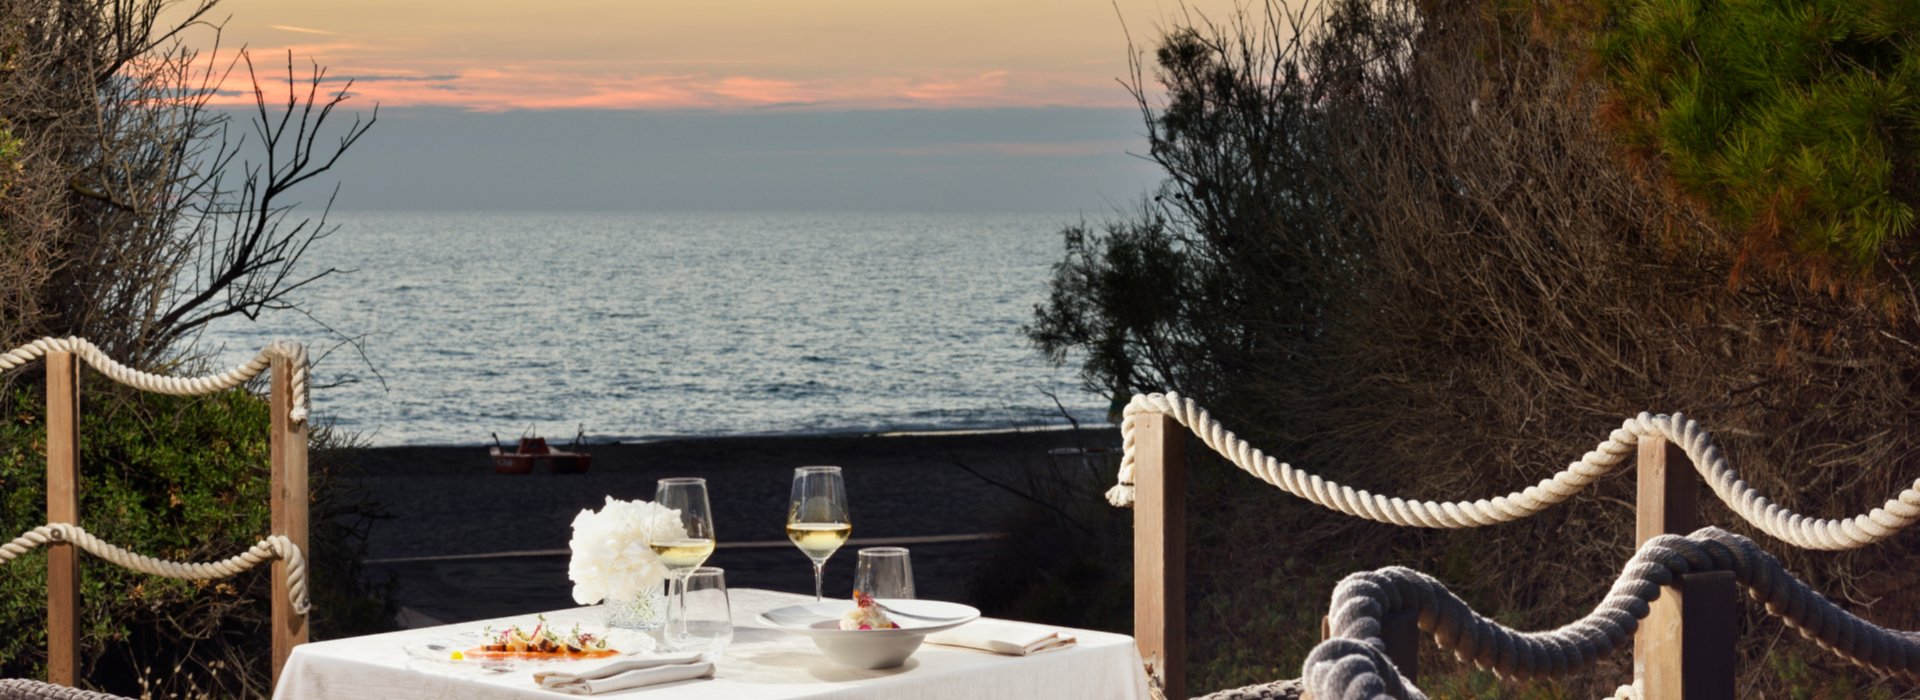 Romantic holiday on the Tuscan coast at Marina di Bibbona